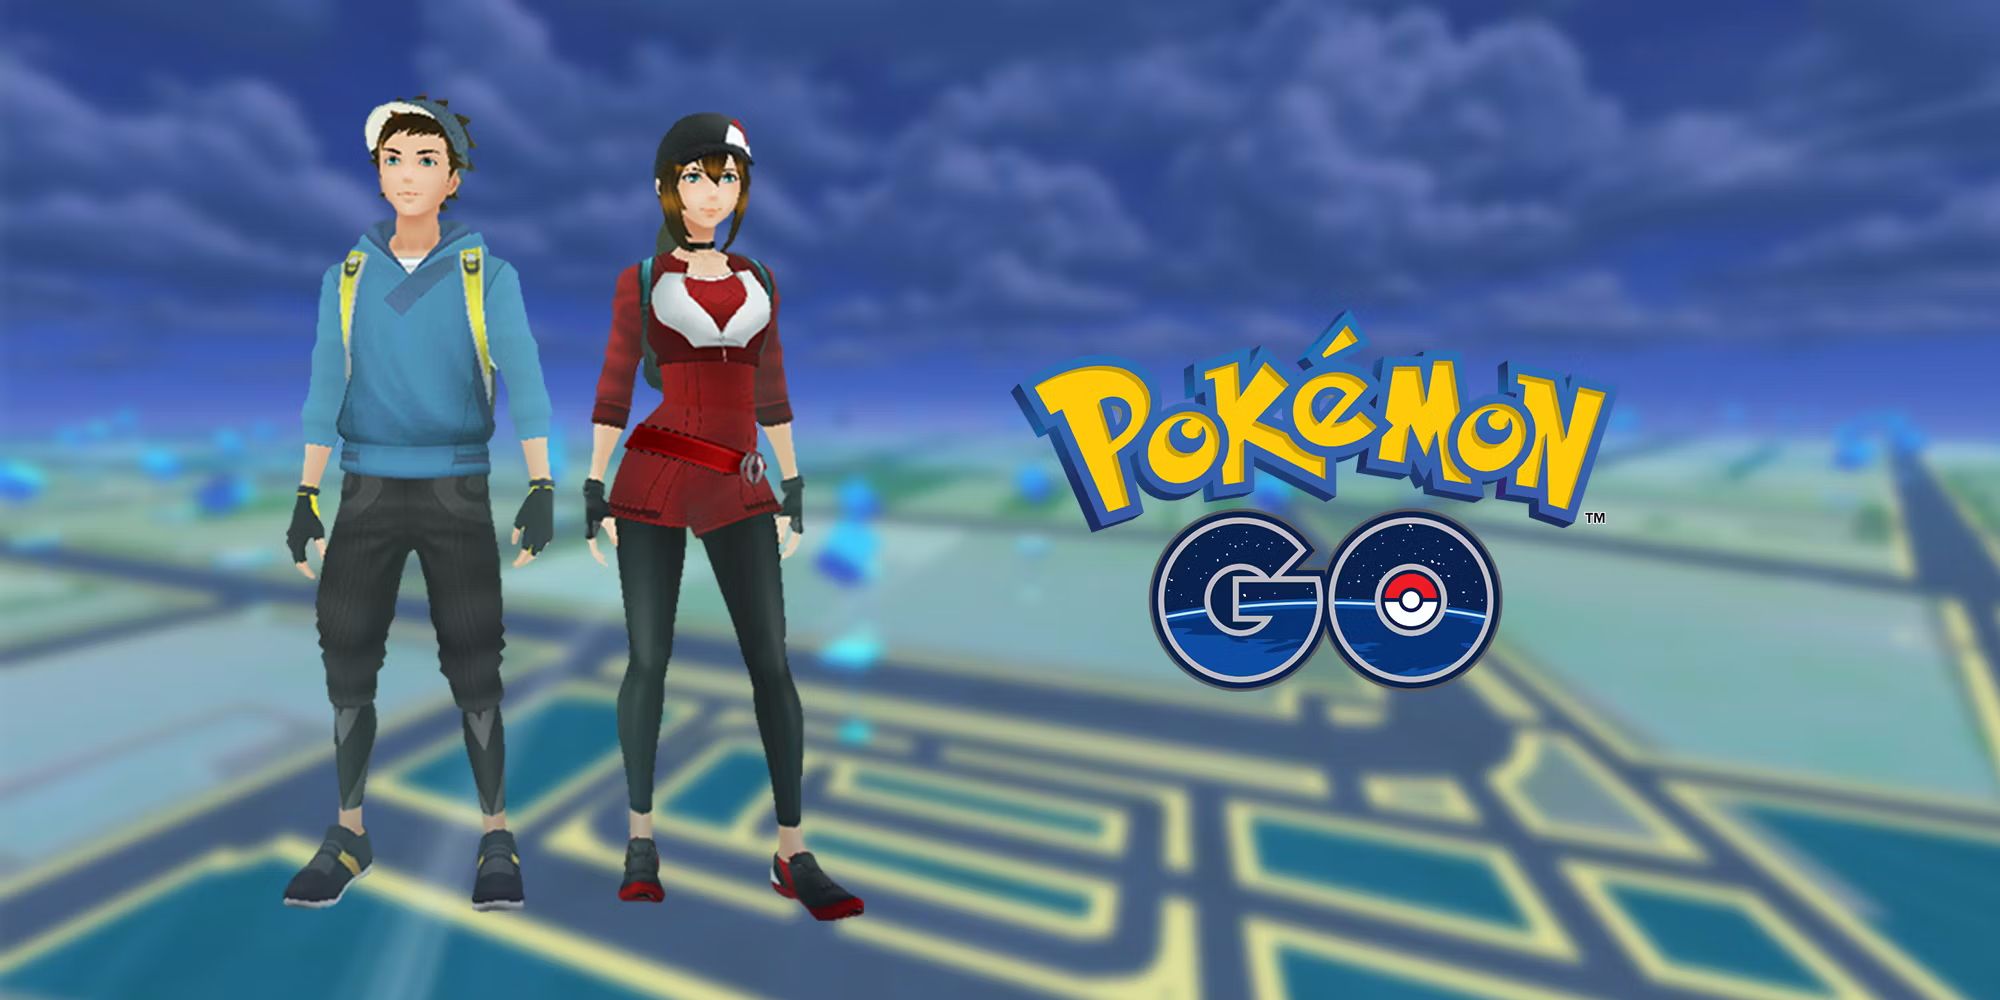 Two Pokemon Go Trainers with the Pokemon Go logo next to them